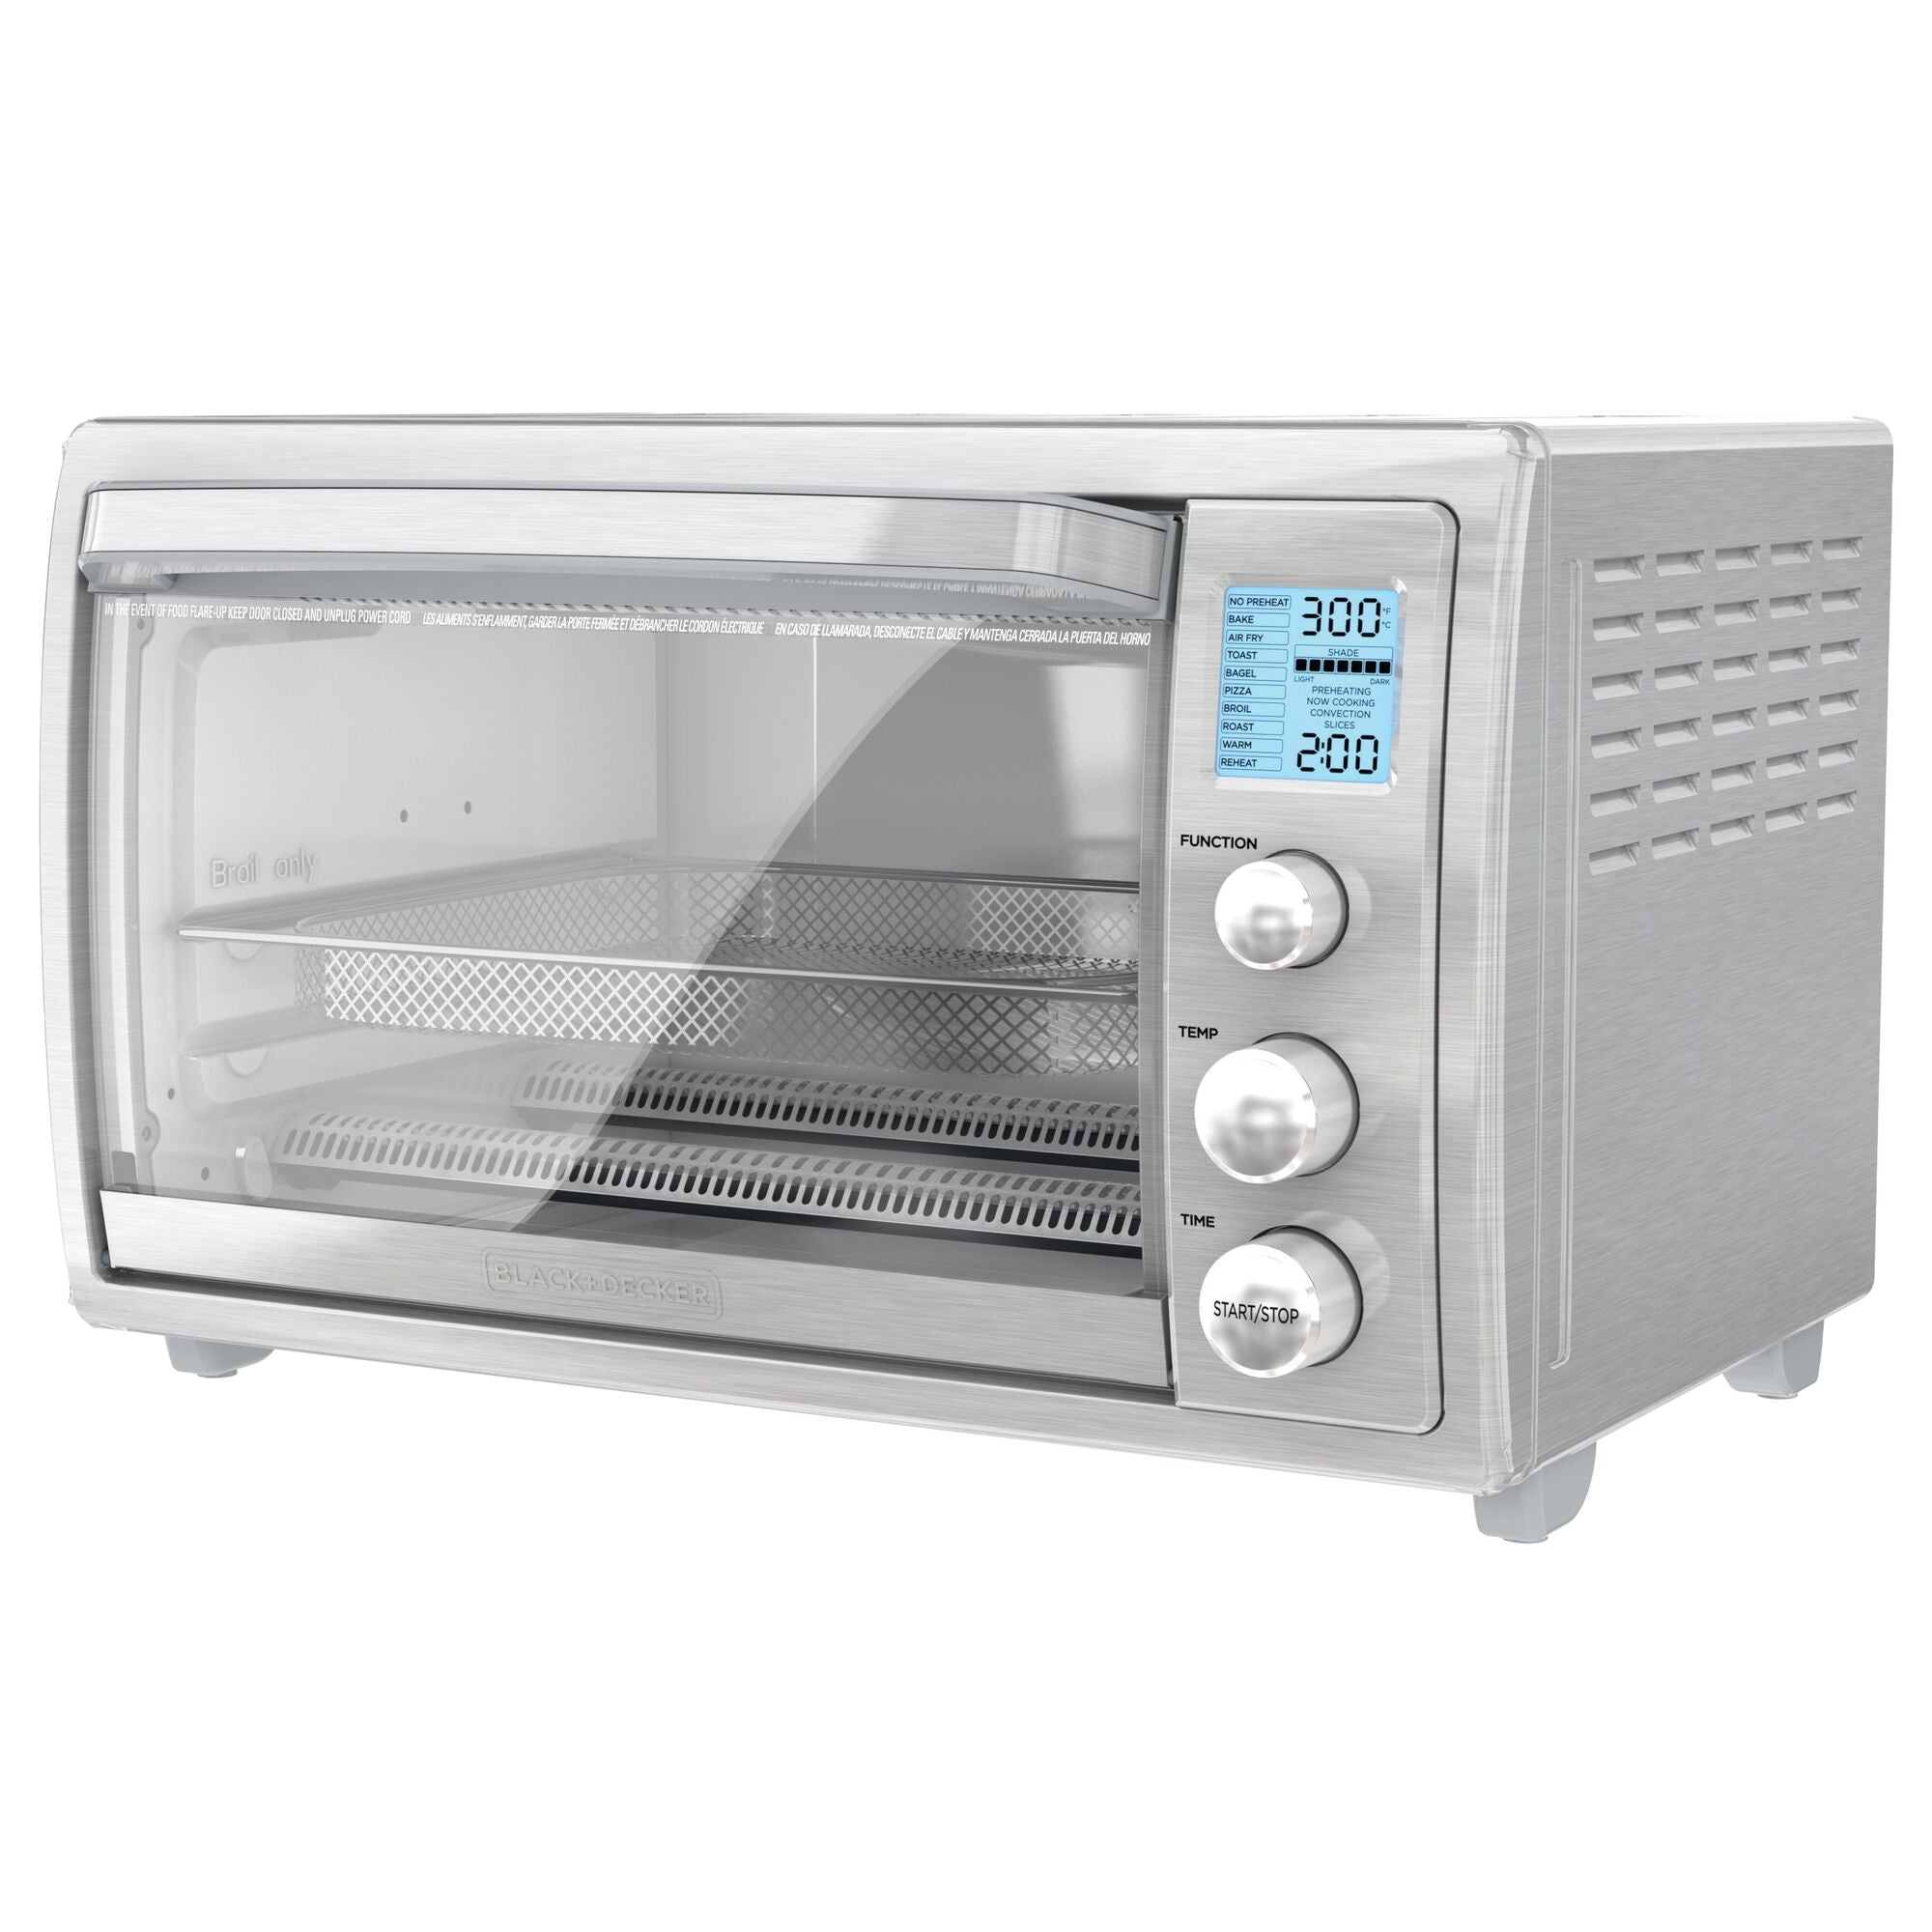 Crisp 'N Bake Air Fry Digital Convection Countertop Oven